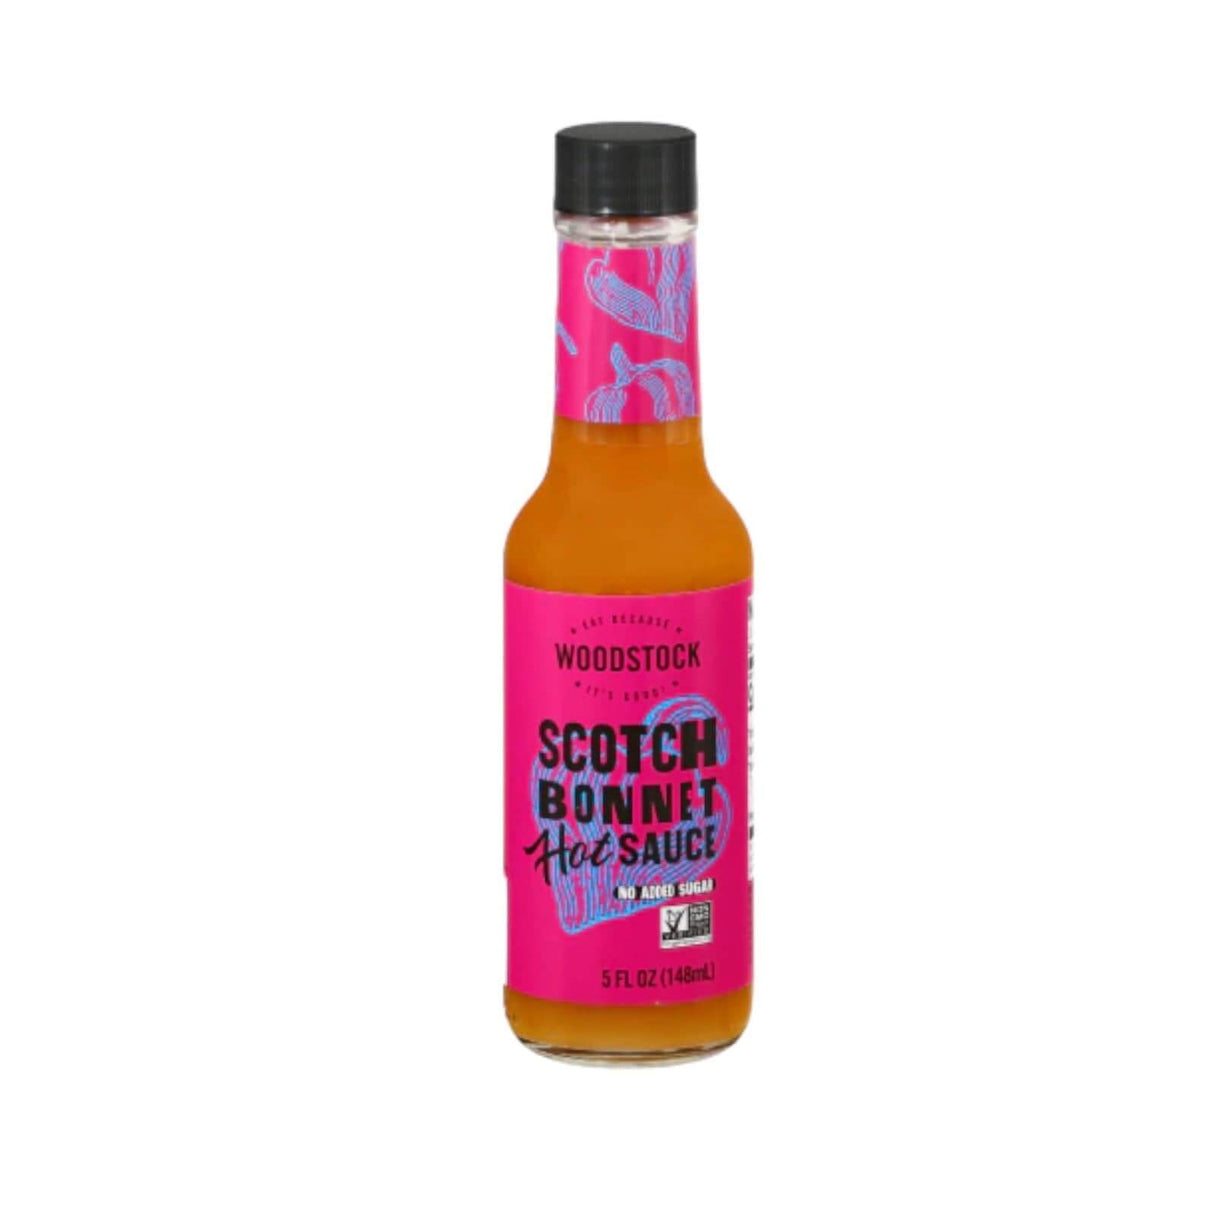 Woodstock Scotch Bonnet Hot Sauce